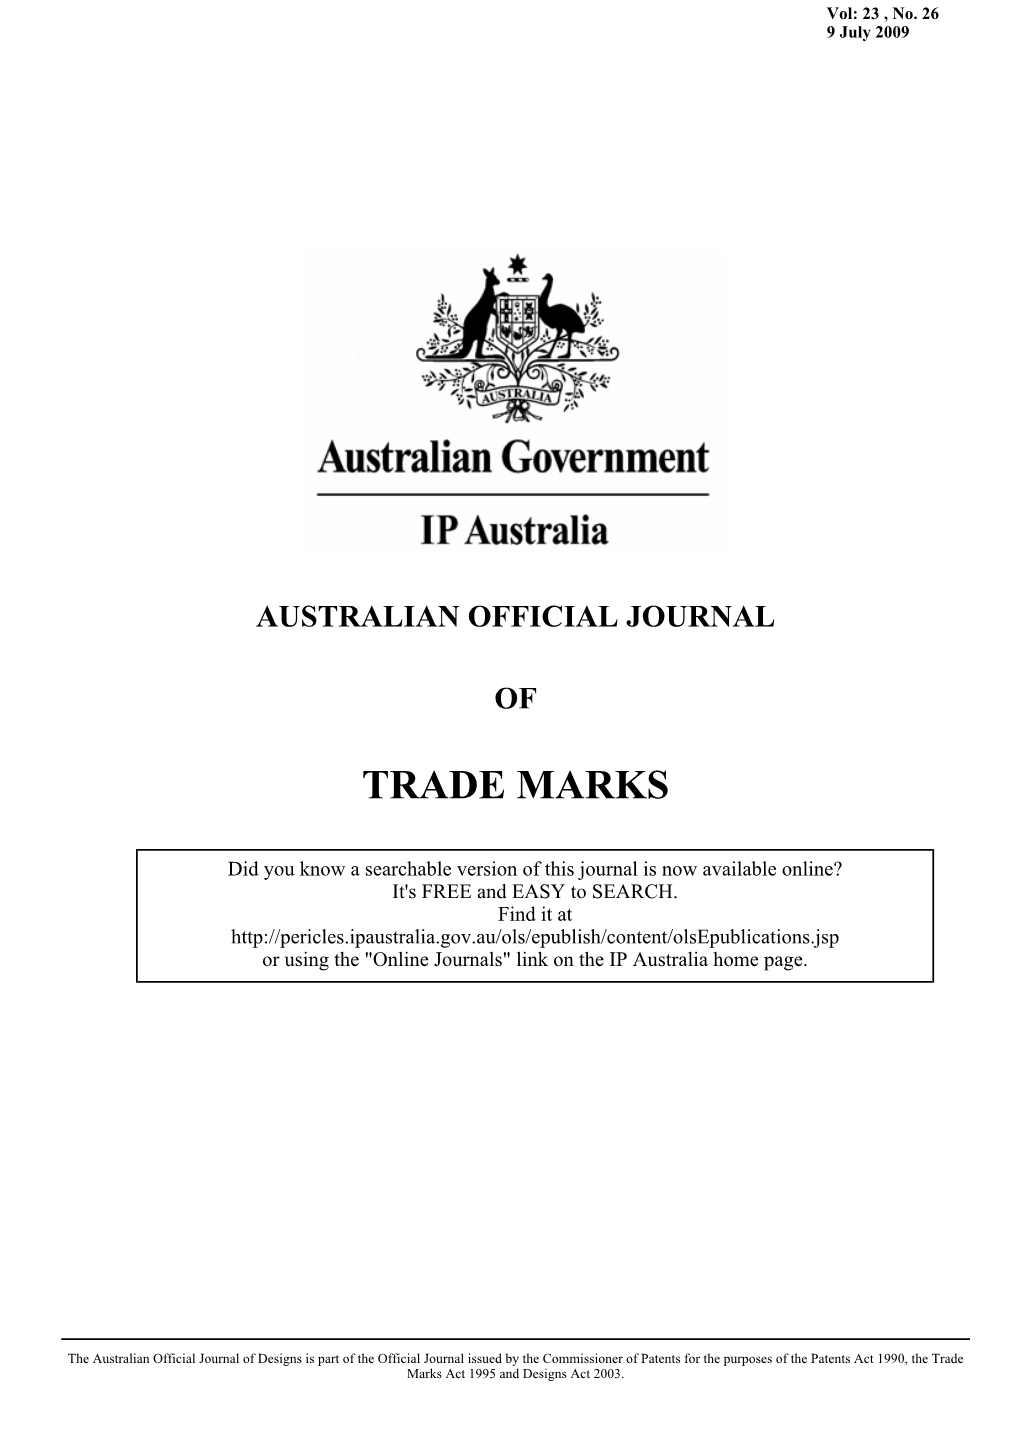 Australian Official Journal Of